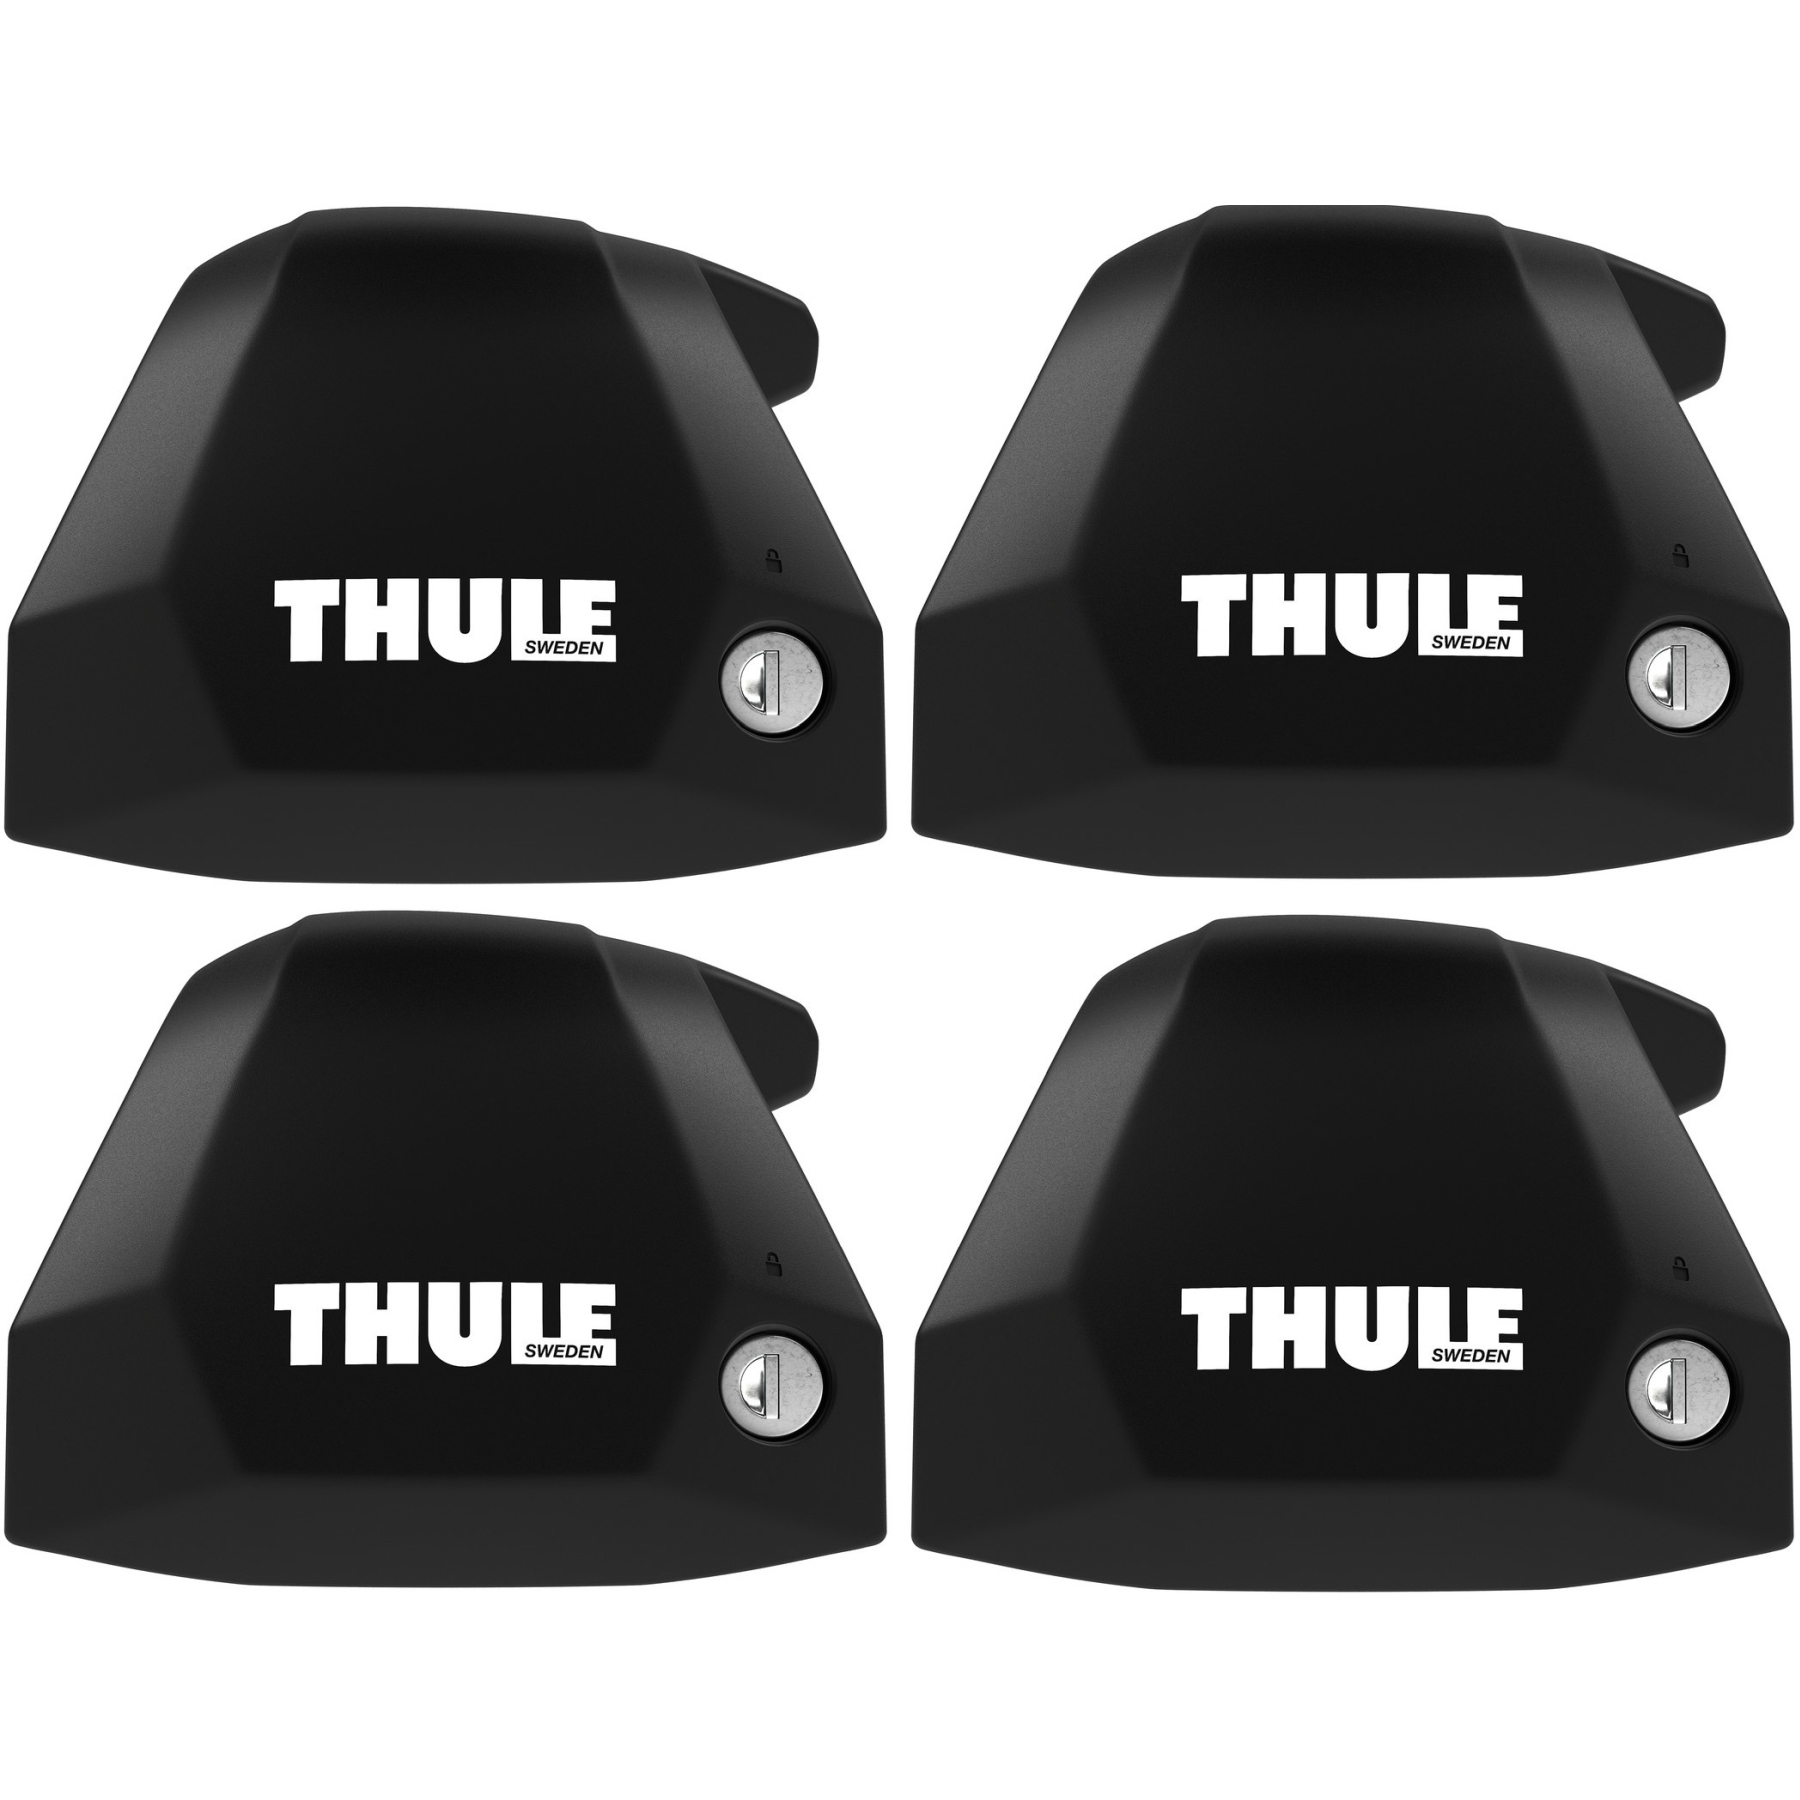 Produktbild von Thule Fixpoint Edge - Lastenträgerfußsatz für Thule Edge Dachträgersystem